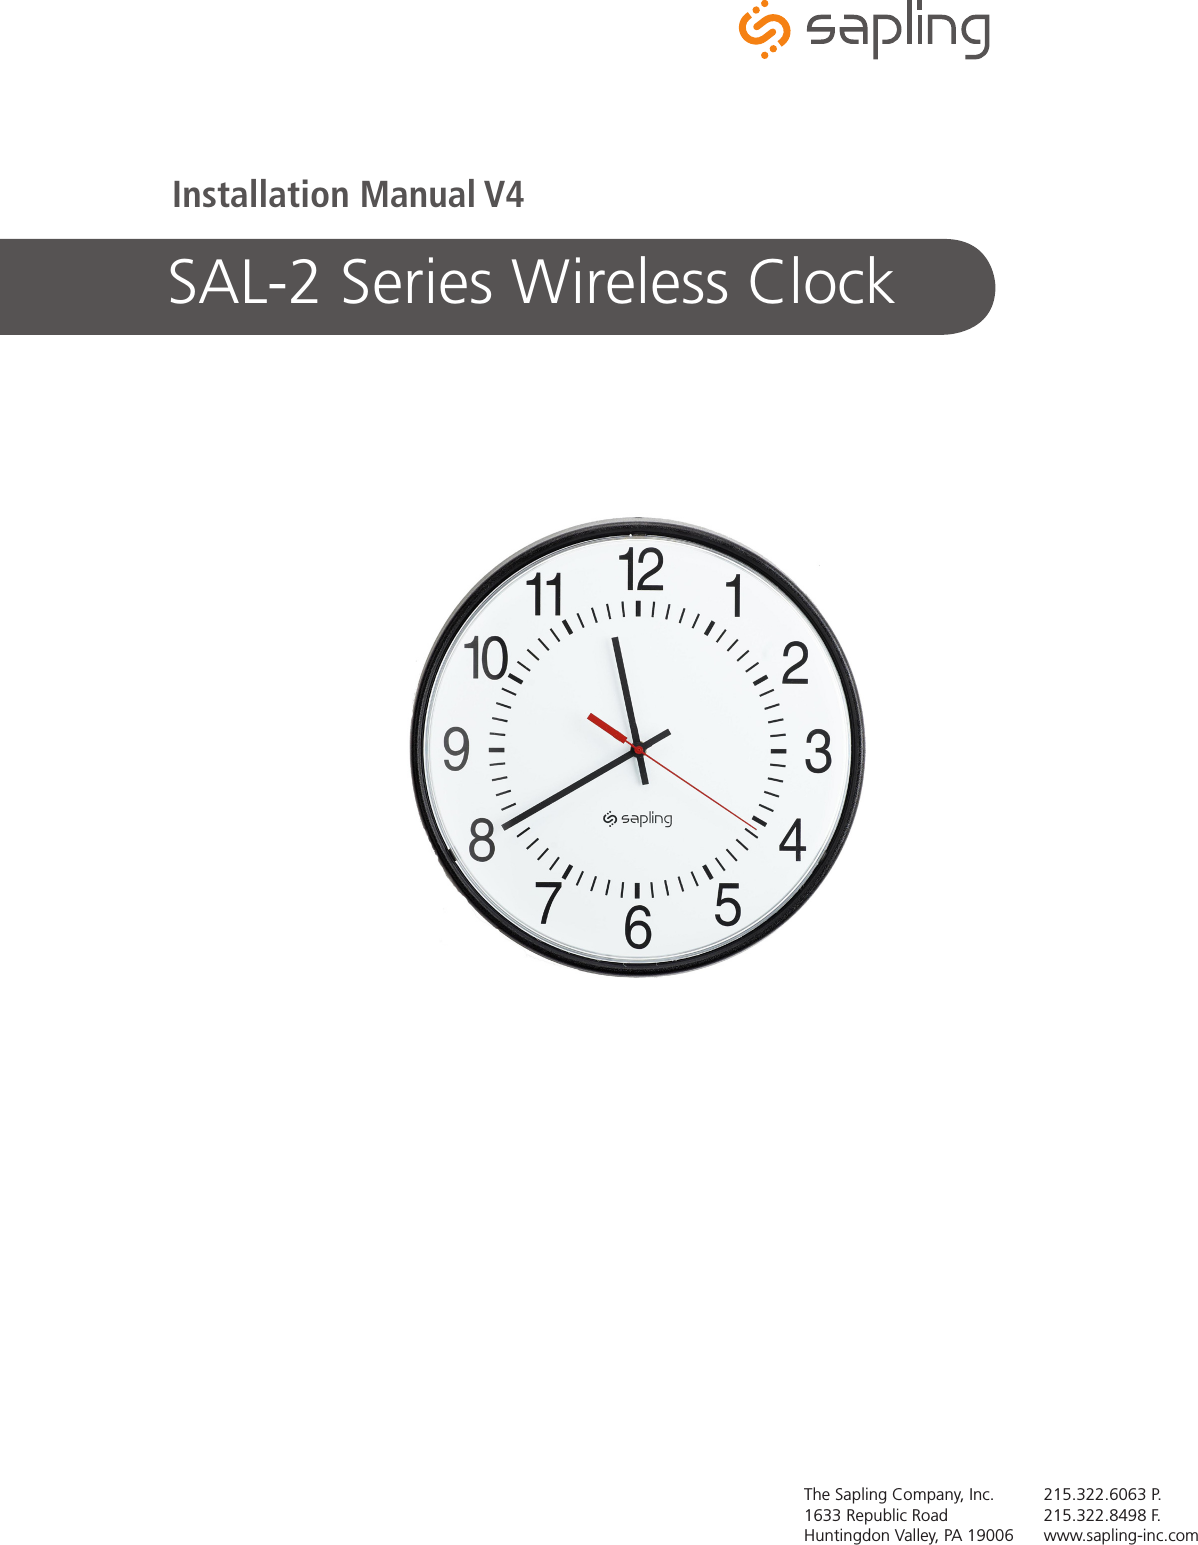 SAL-2 Series Wireless ClockThe Sapling Company, Inc.1633 Republic RoadHuntingdon Valley, PA 19006215.322.6063 P.215.322.8498 F.www.sapling-inc.comInstallation Manual V4